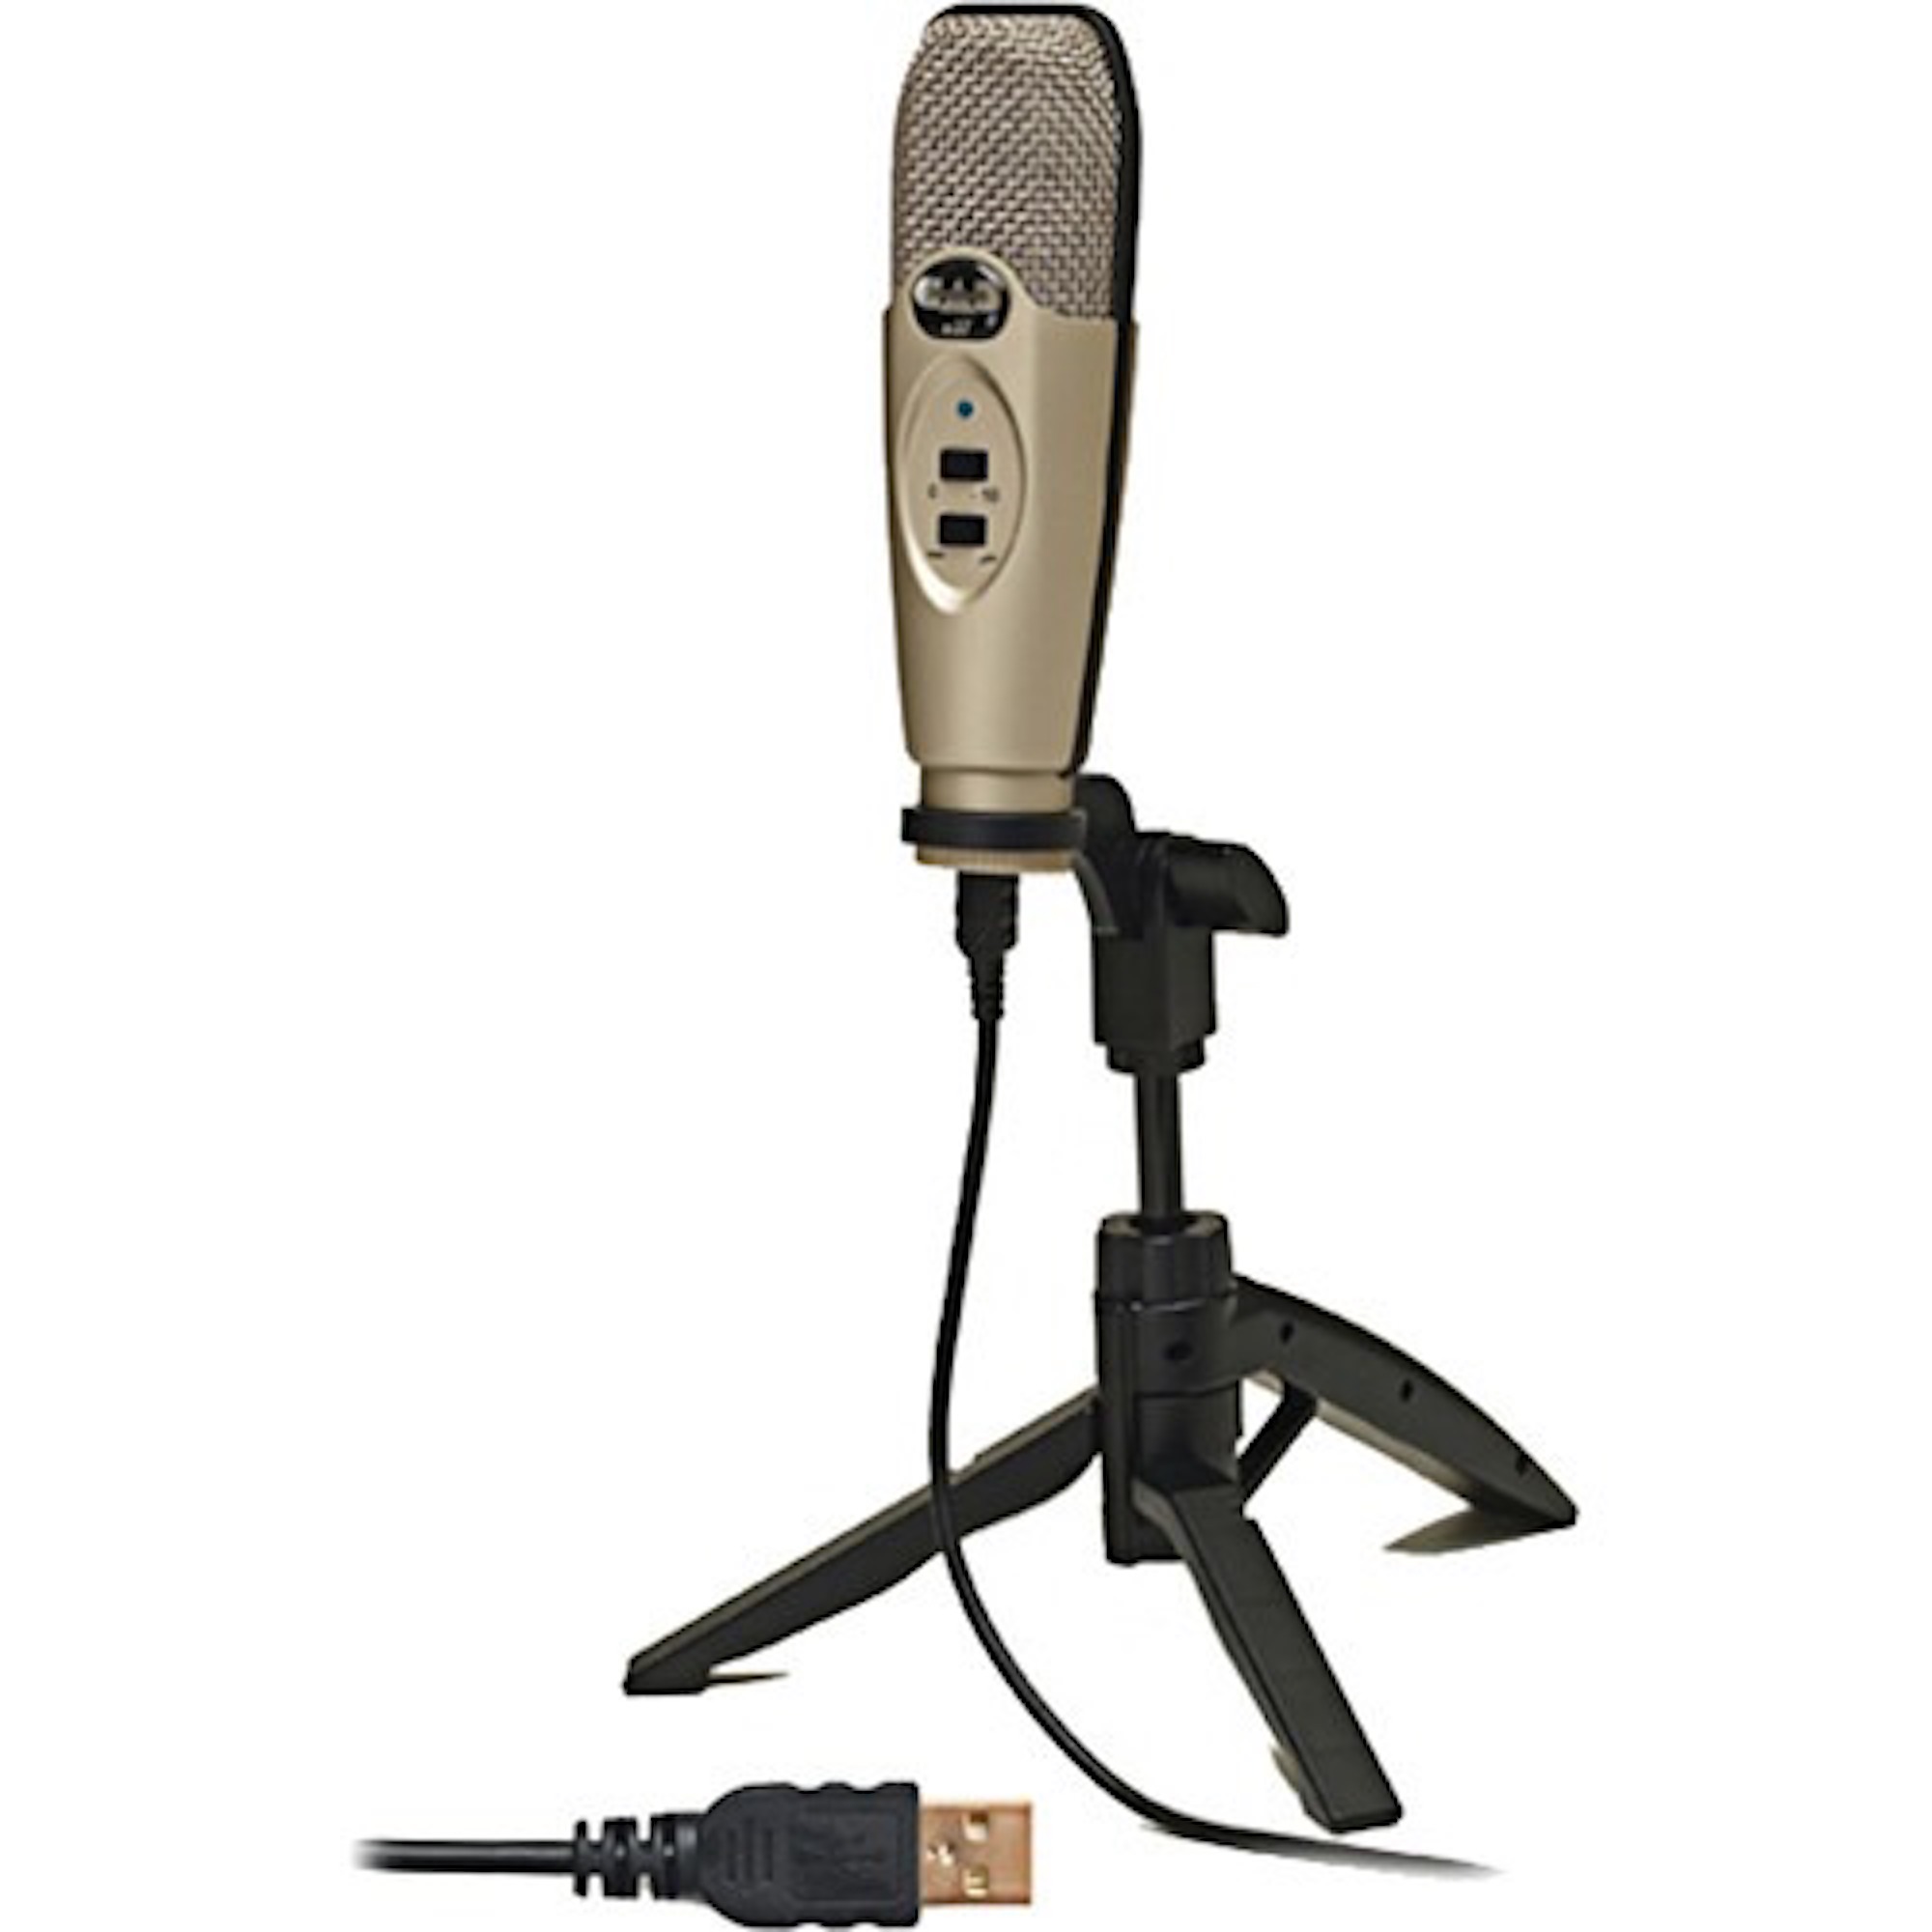 CAD Audio U37 Large-Diaphragm Cardioid Condenser Microphone (Champagne) $30 + Free S/H